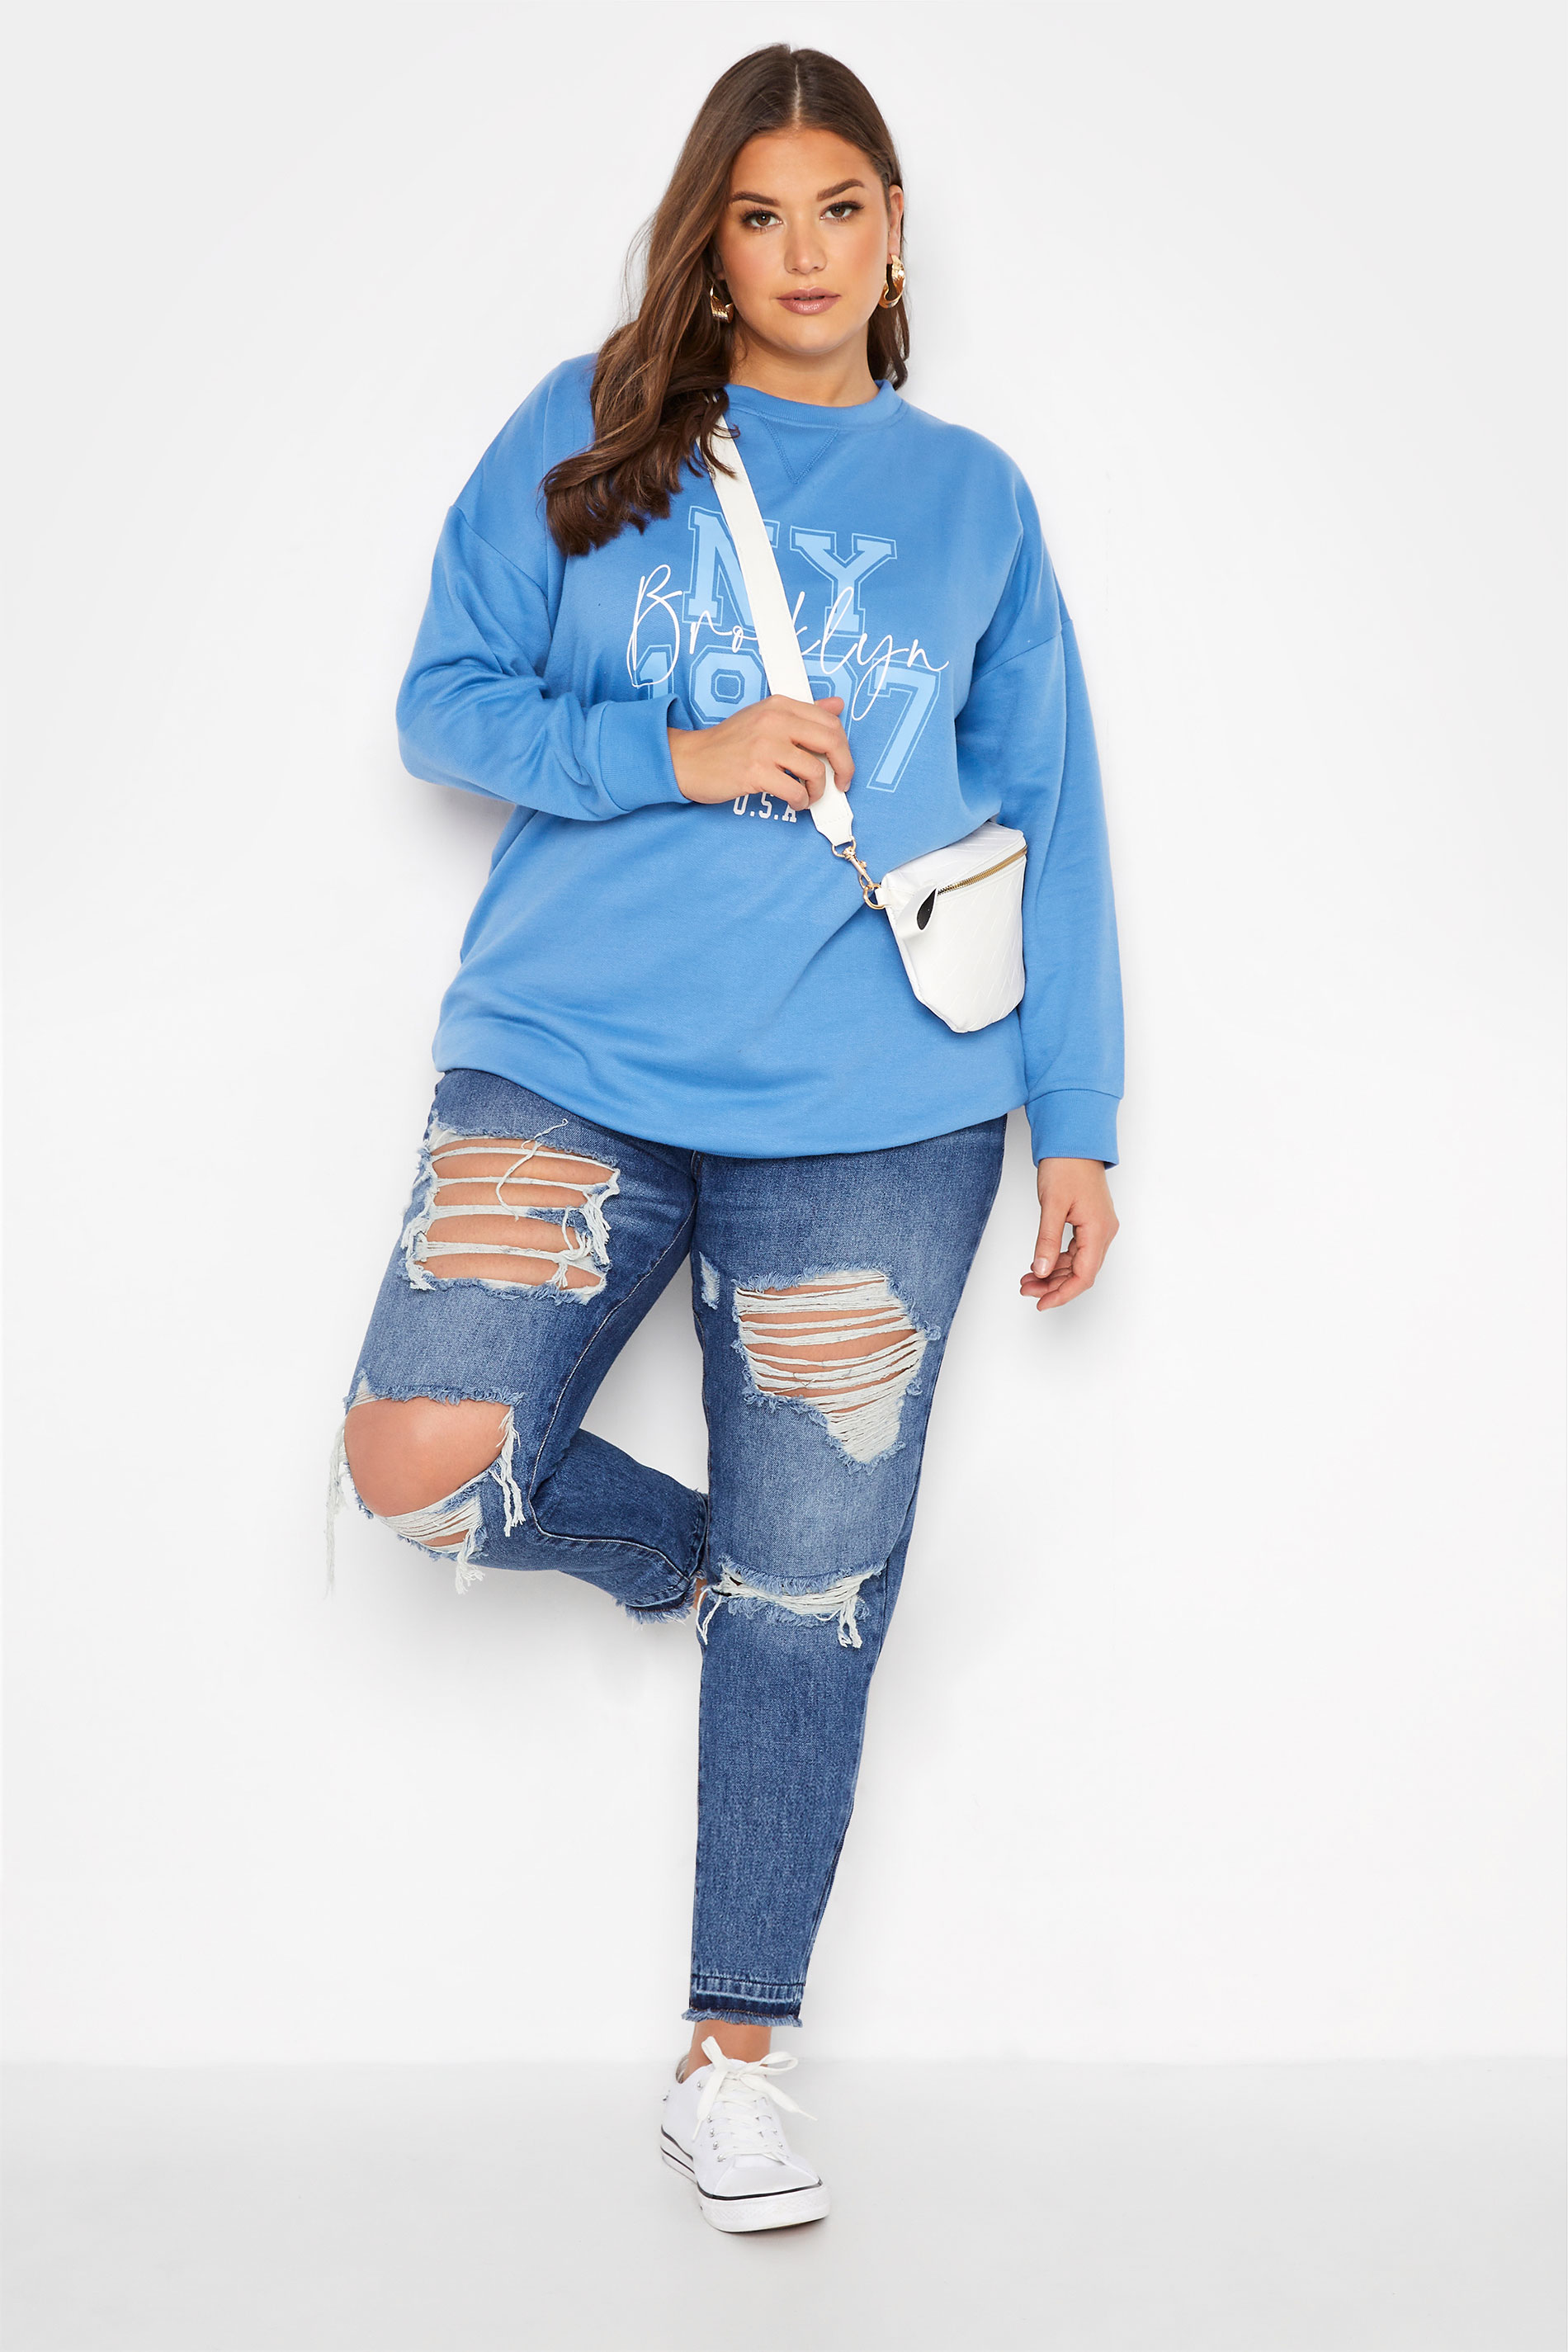 Grande taille  Pulls à Capuche, Sweatshirts & Polaires Grande taille  Sweatshirts | Sweatshirt Bleu Slogan 'Brooklyn New York' - WE52245